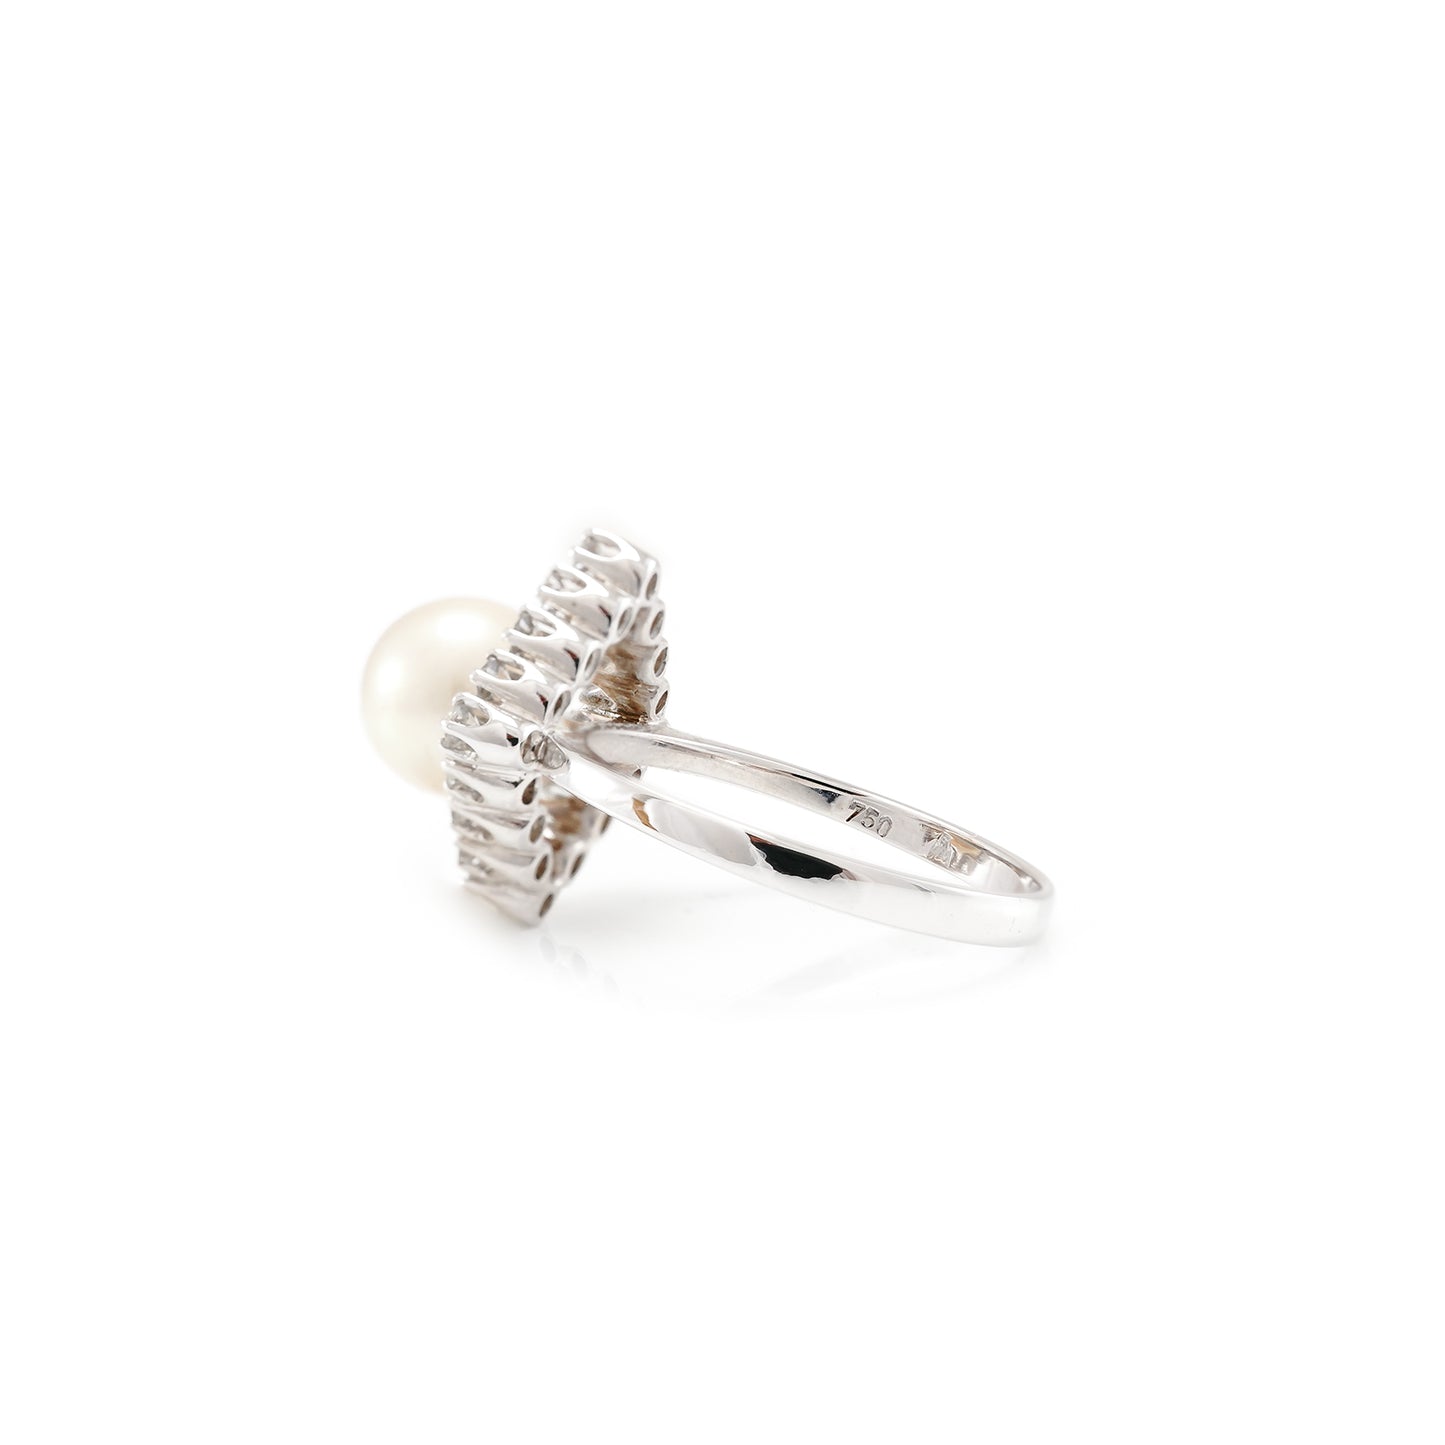 Ring white gold diamond brilliant pearl 750 18K RW58 women's jewelry gold ring